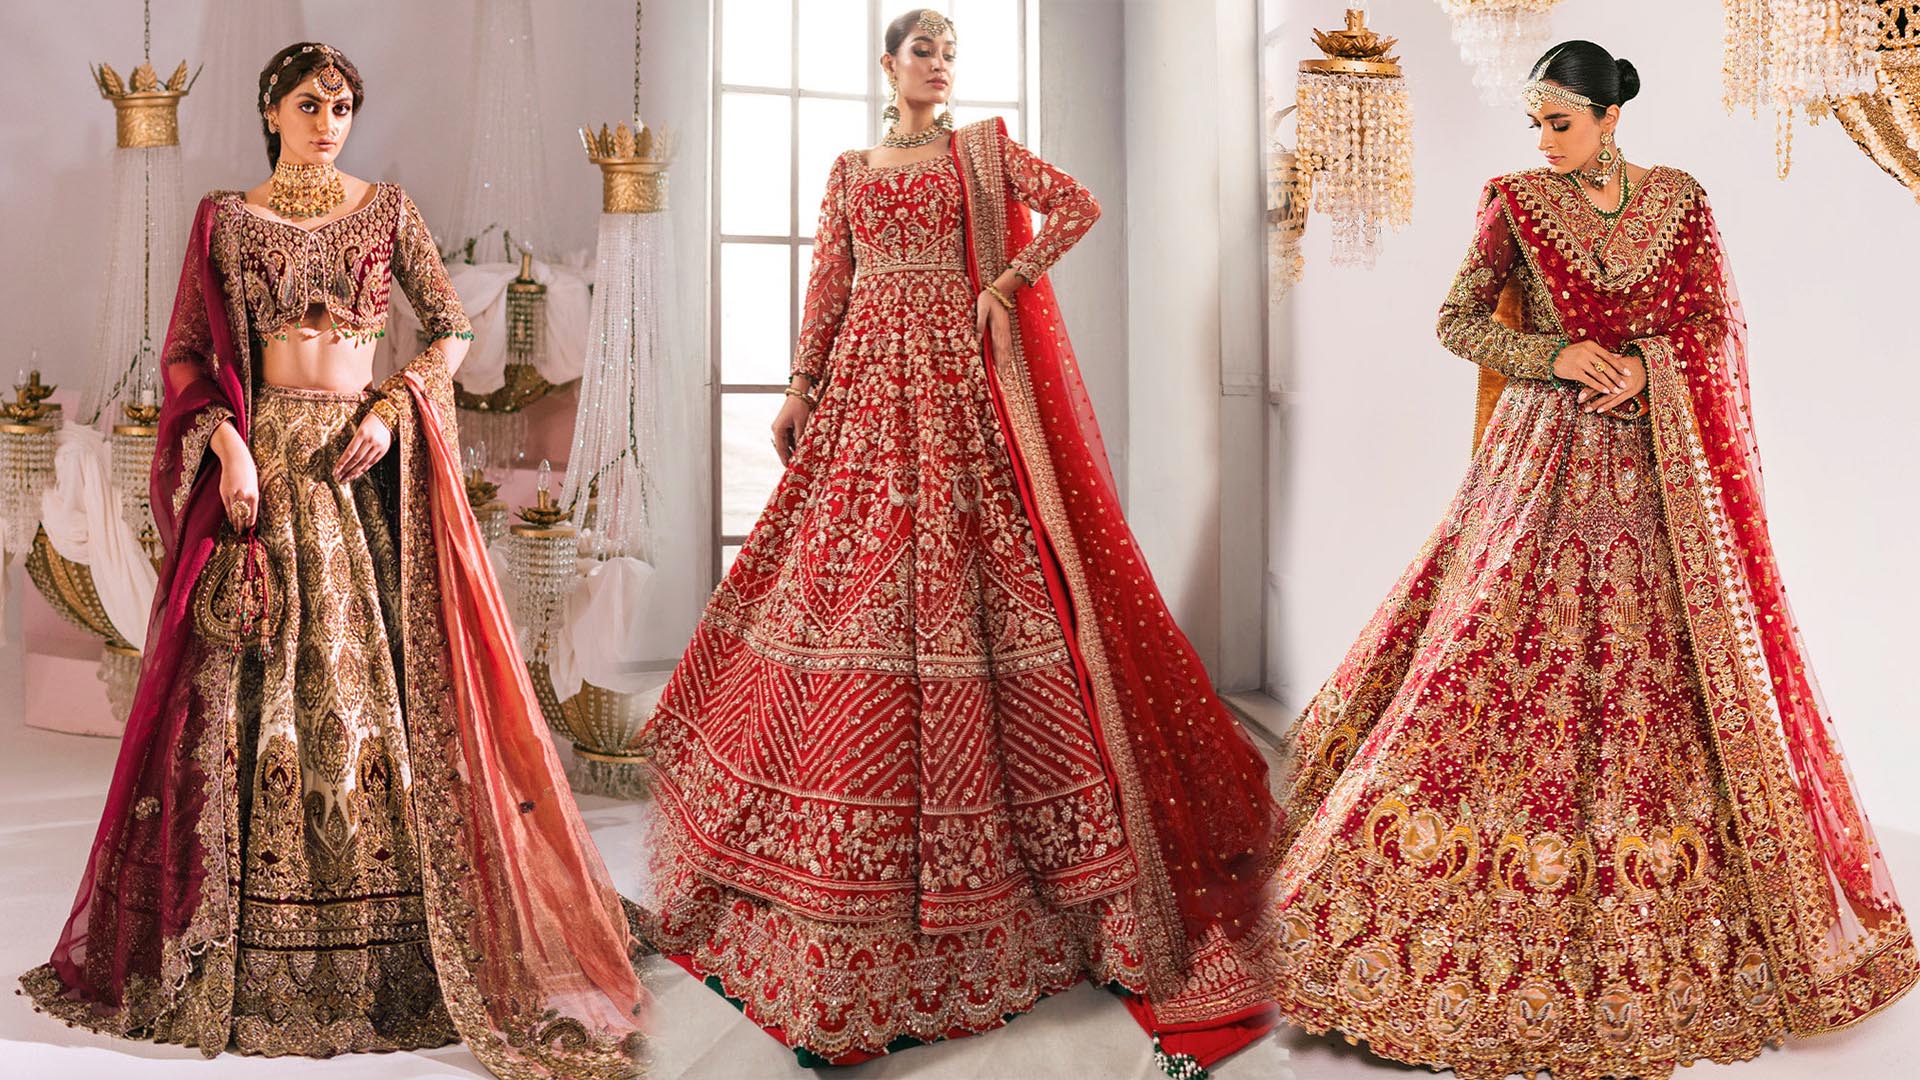 Bridal Lehenga: A Timeless Indian Garment for Weddings and Beyond